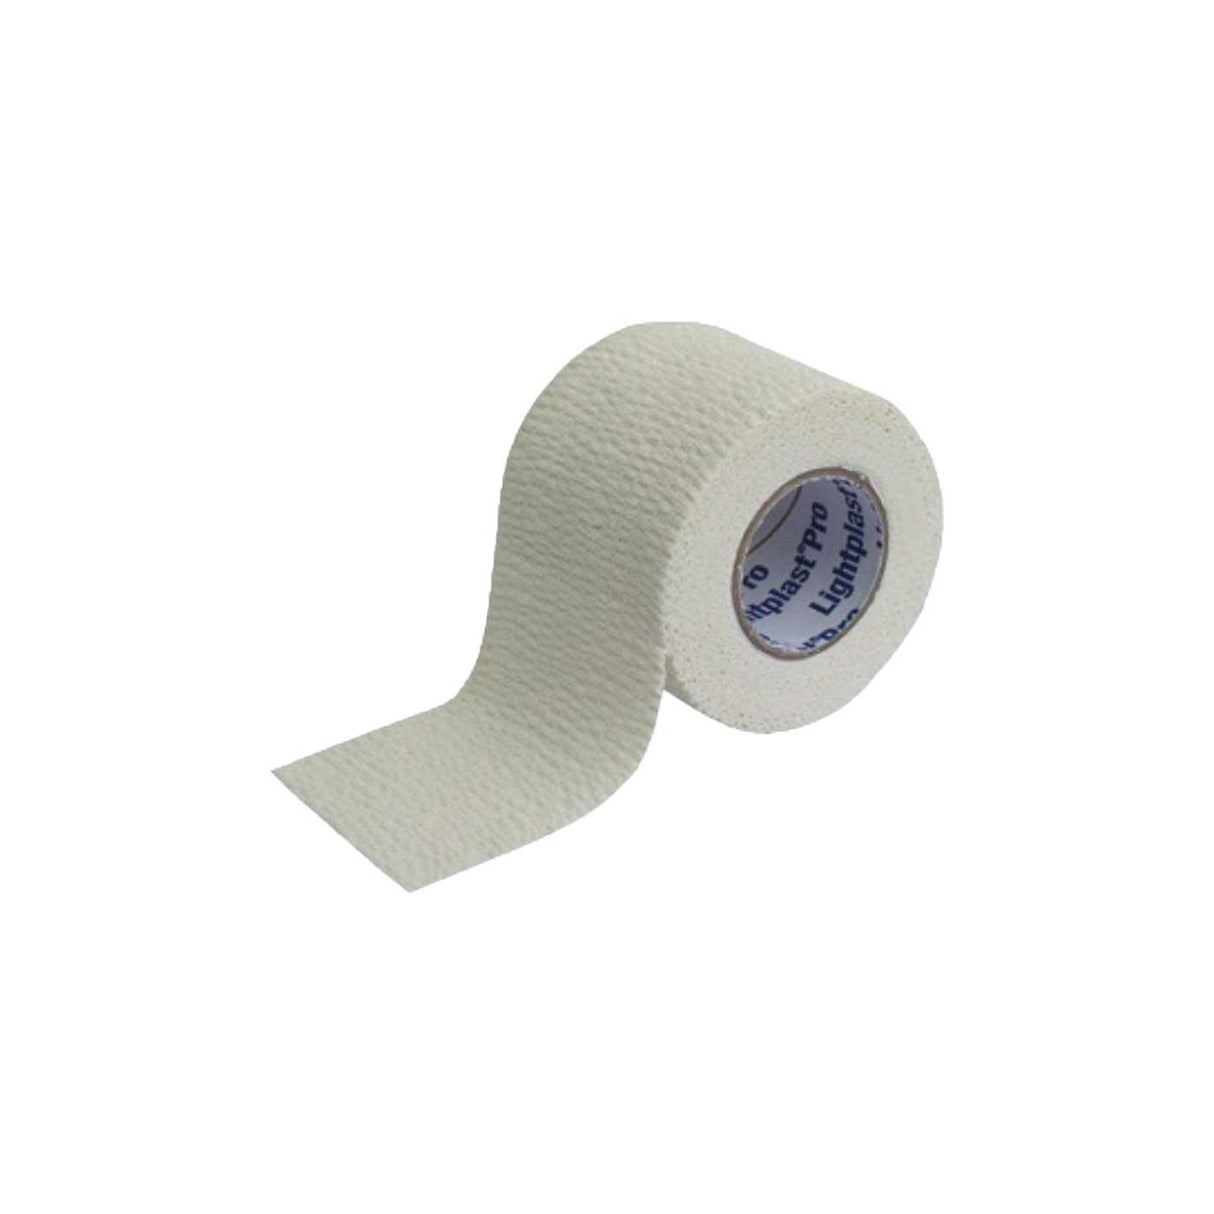 3M Lightplast Pro Bandage 7.5 cm x 6.8 m - Single Roll